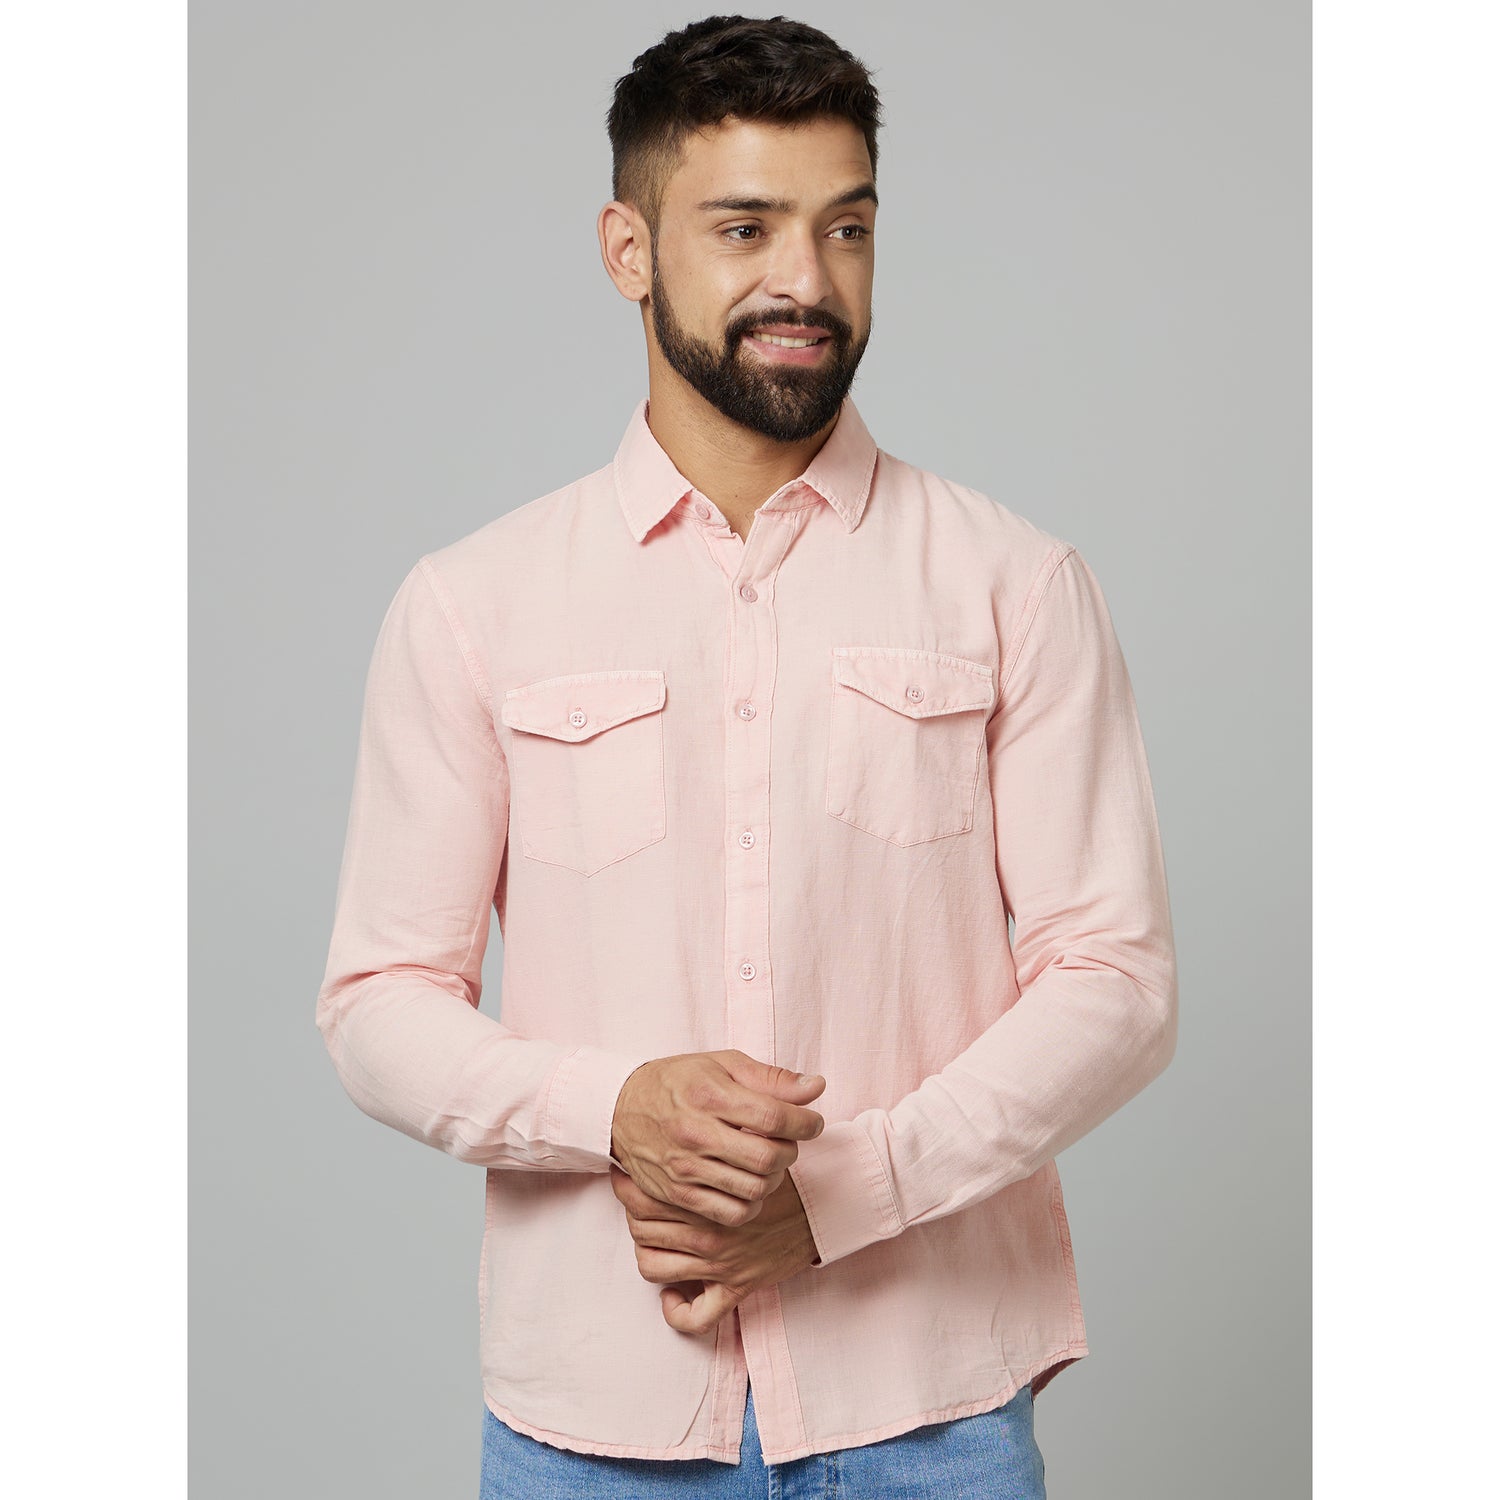 Pink Classic Spread Collar Casual Cotton Shirt (CALINOD)